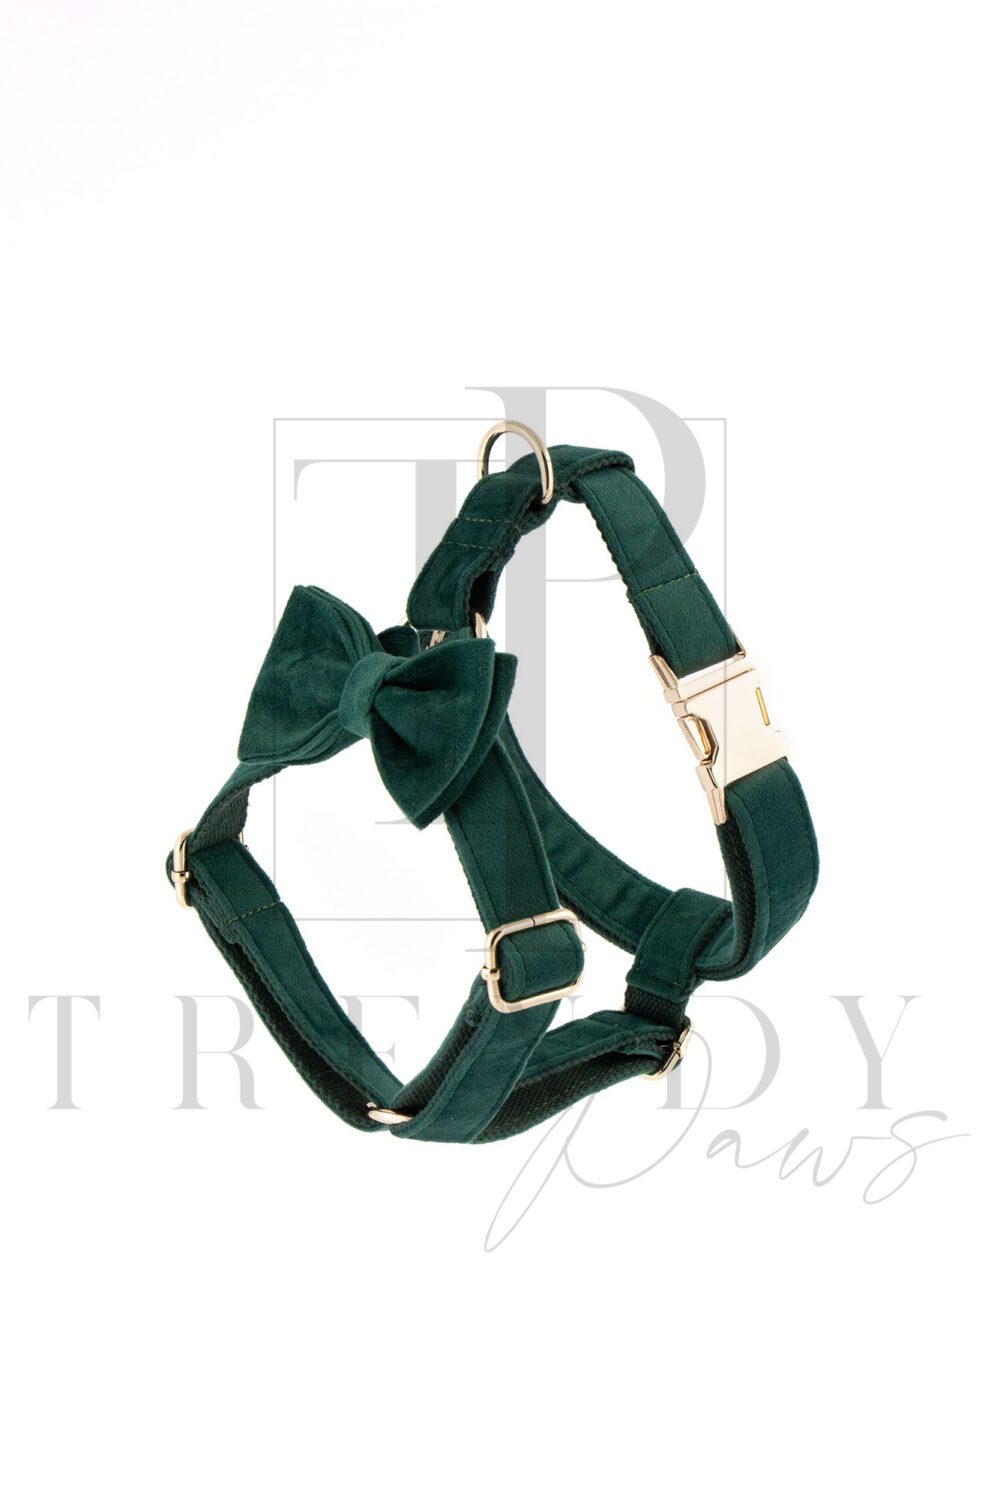 Green velvet soft dog harnesses harness bow ties